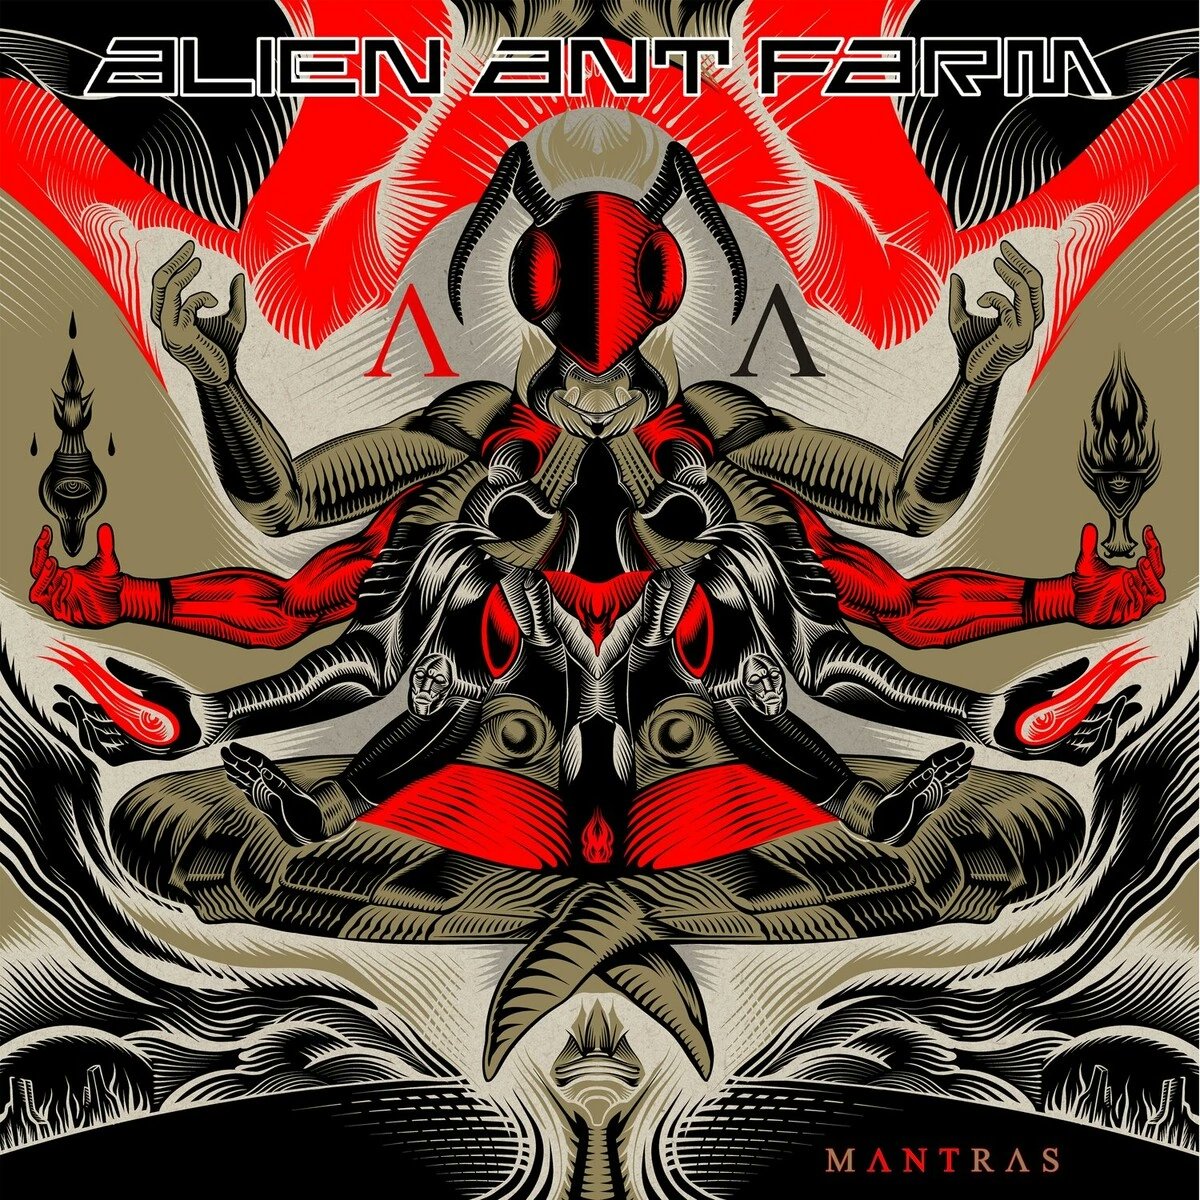 Alien Ant Farm - ~mAntras~ (2024)
Alternative Rock 
USA
#rocknewsreleases #rocknewsrelease #rocknews #rock #rnr #rn #alternativerock #aaf #alienantfarm 

@AlienAntFarm_